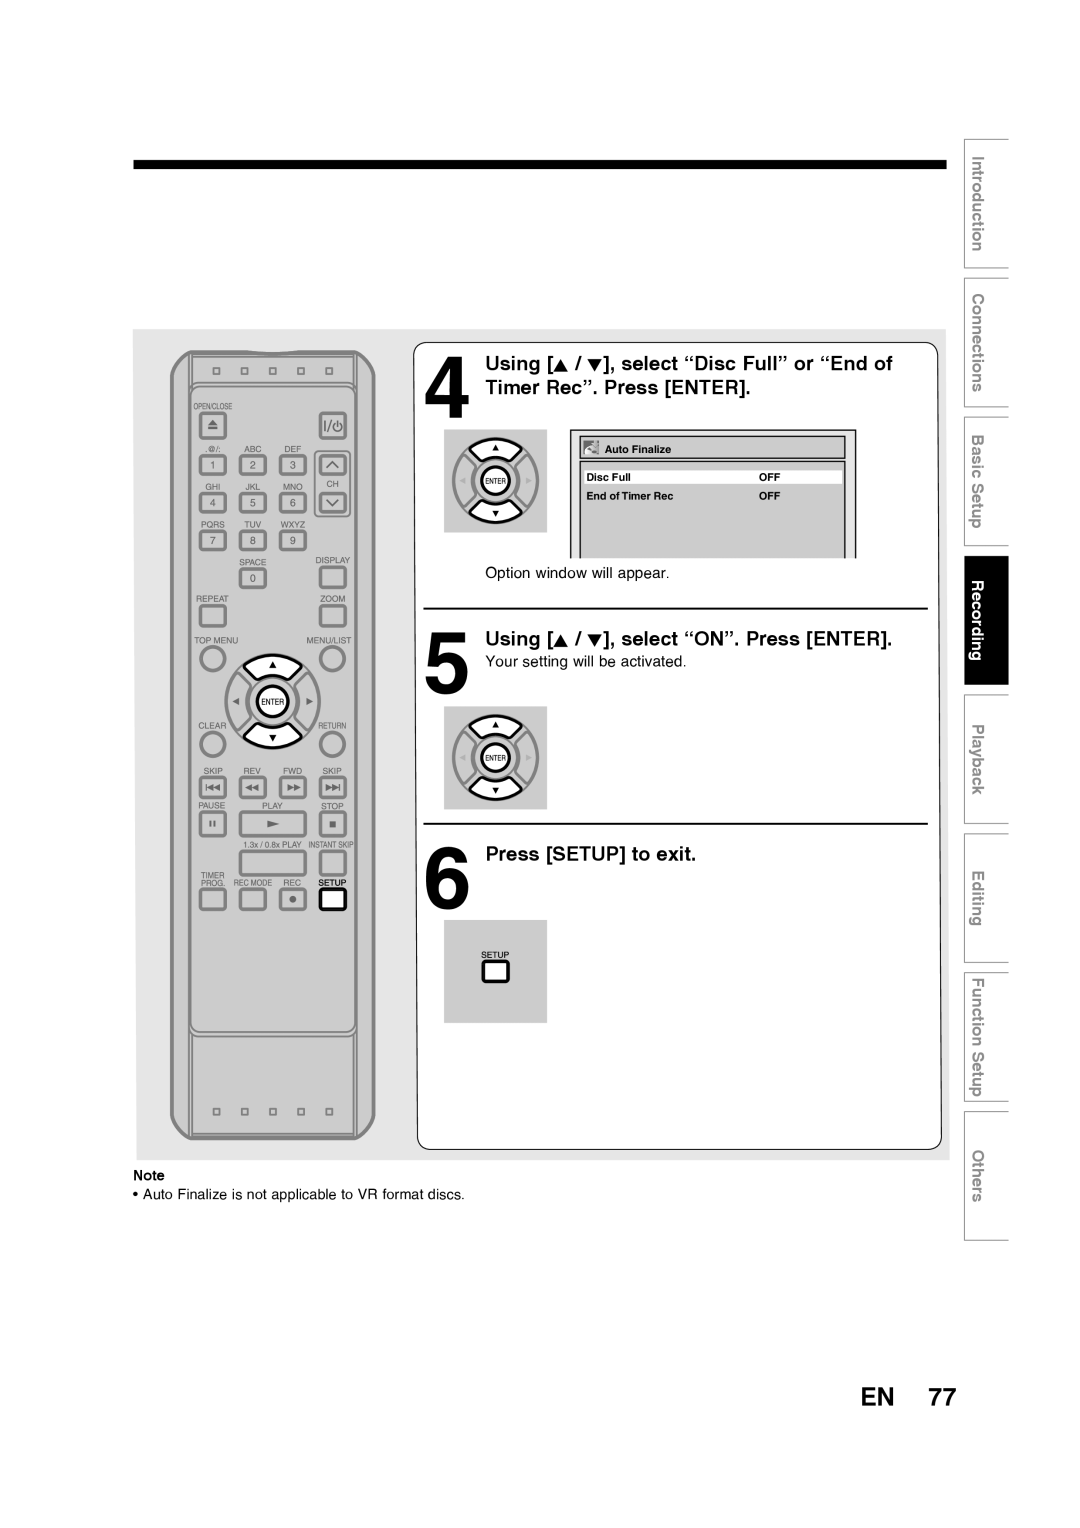 Toshiba D-RW2SU/D-RW2SC manual Using K / L, select “Disc Full” or “End of Timer Rec”. Press ENTER, Press SETUP to exit 